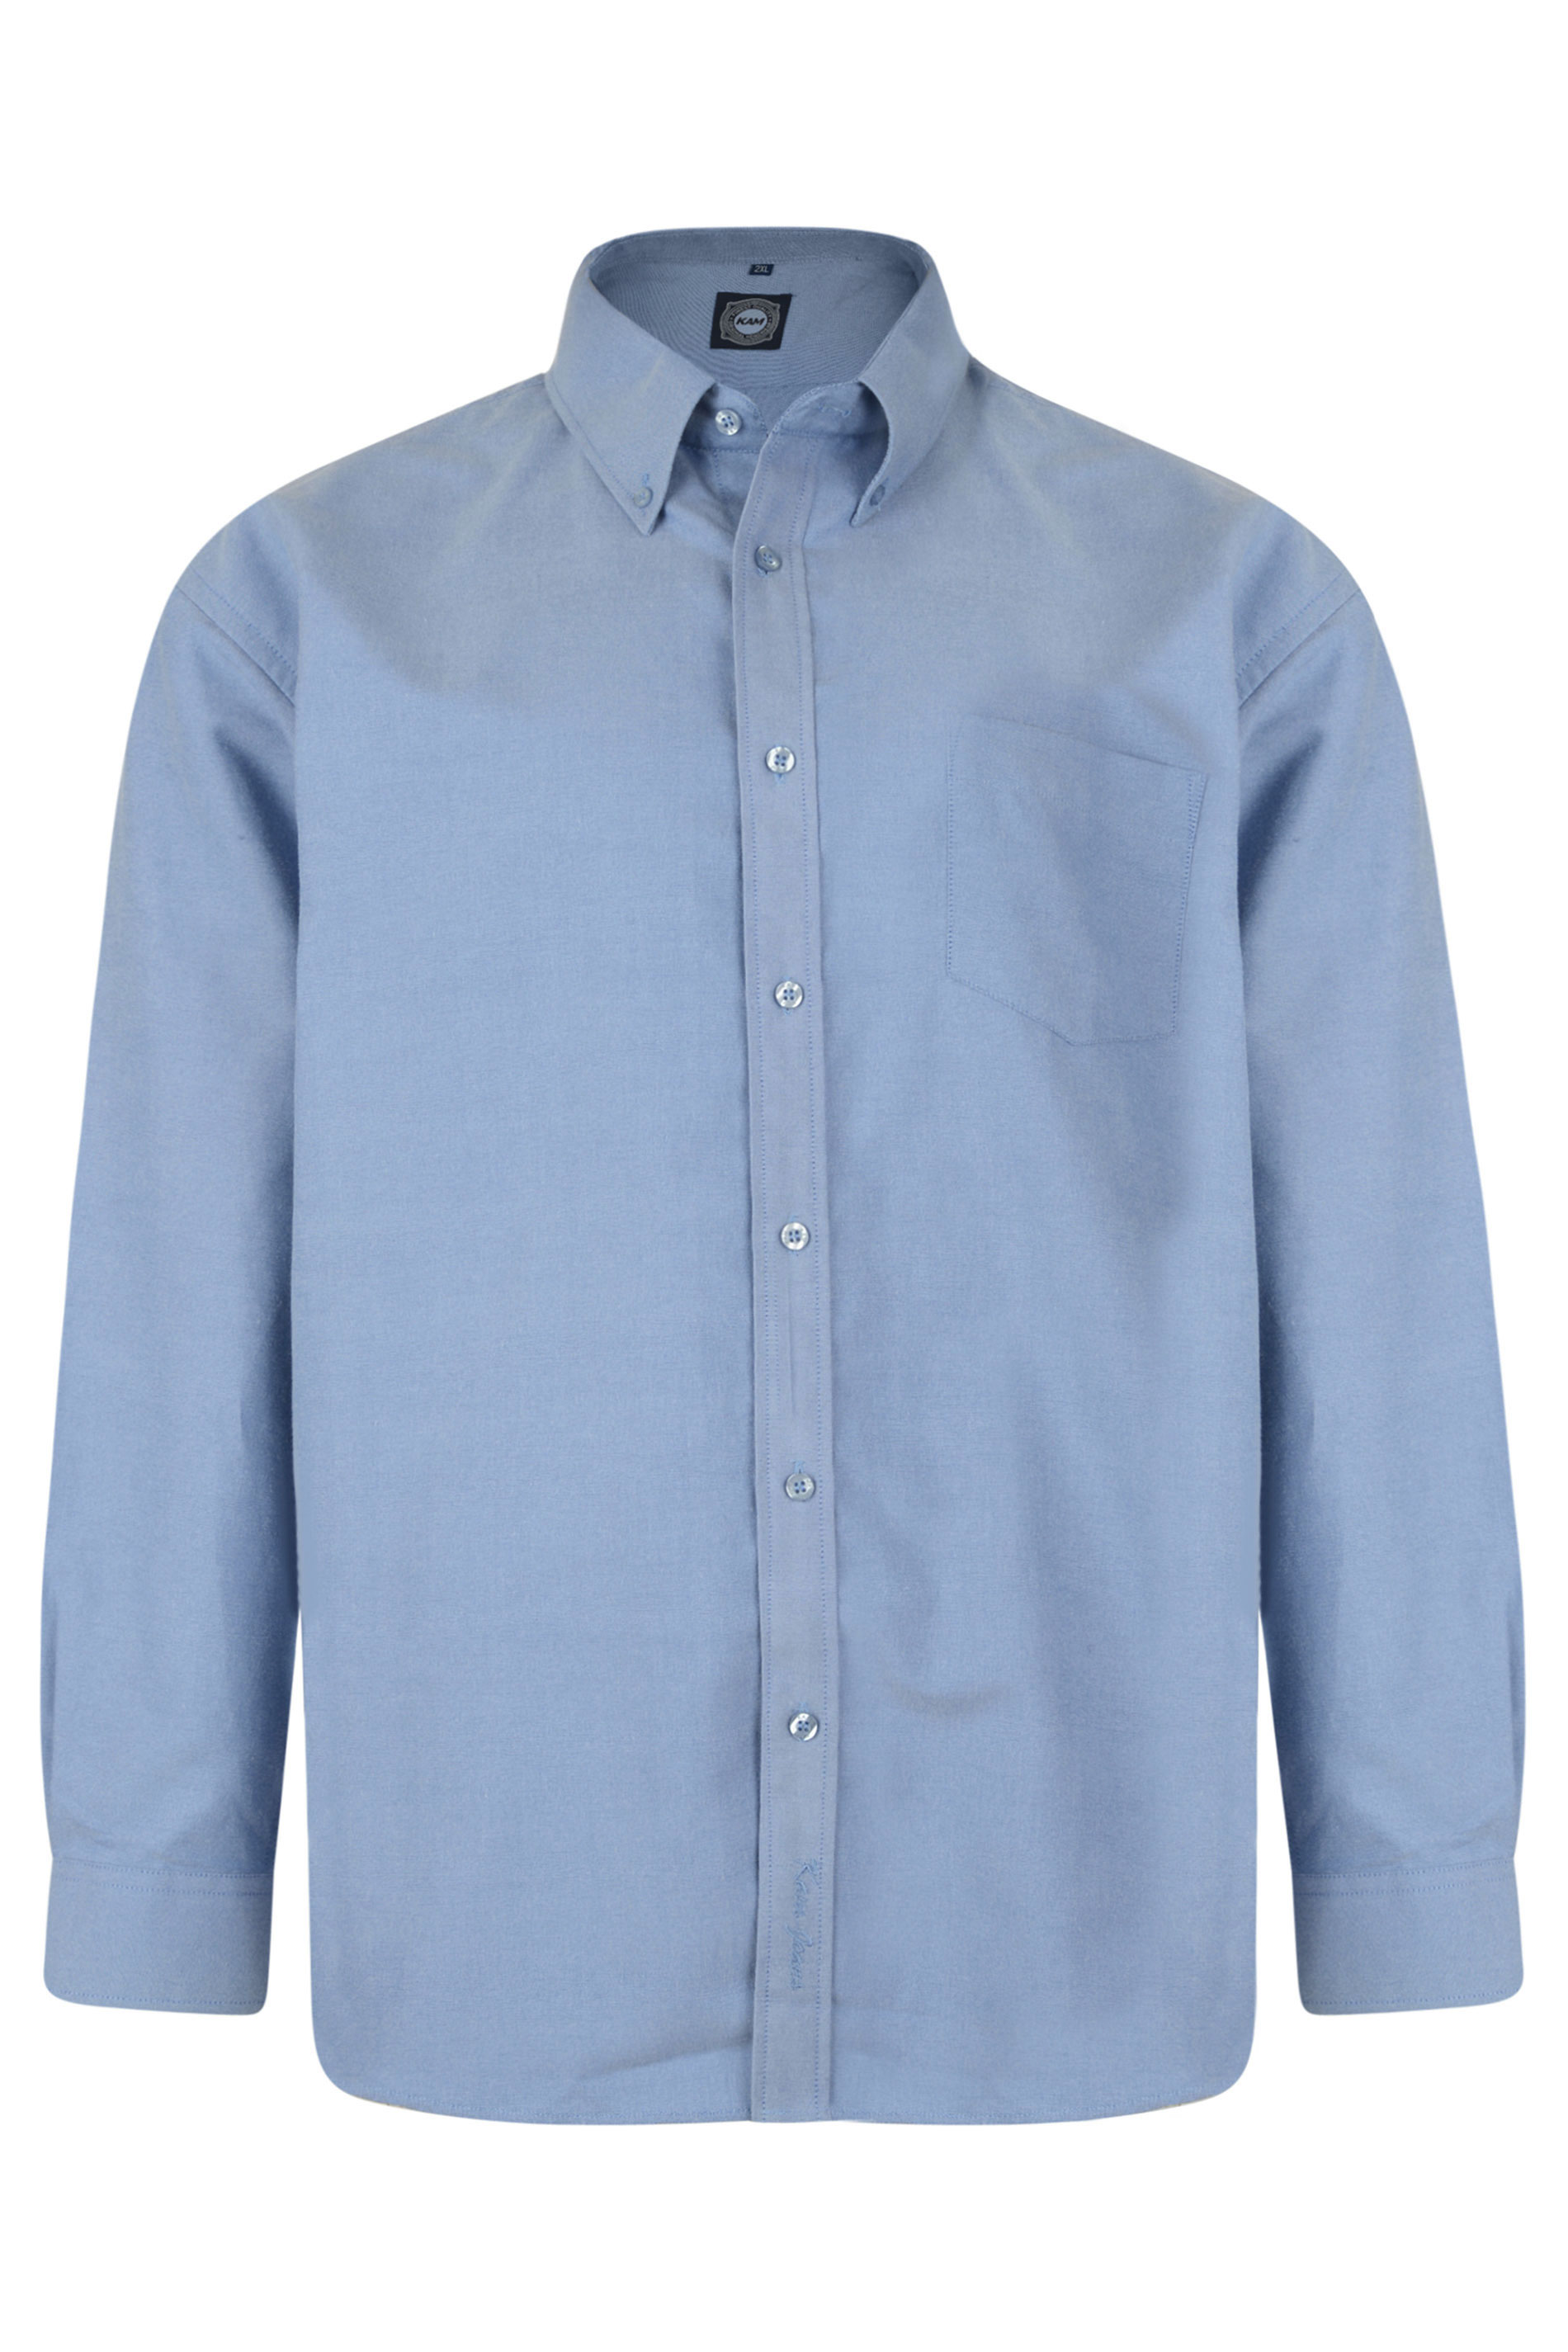 KAM Big & Tall Blue Oxford Long Sleeve Shirt | BadRhino 2